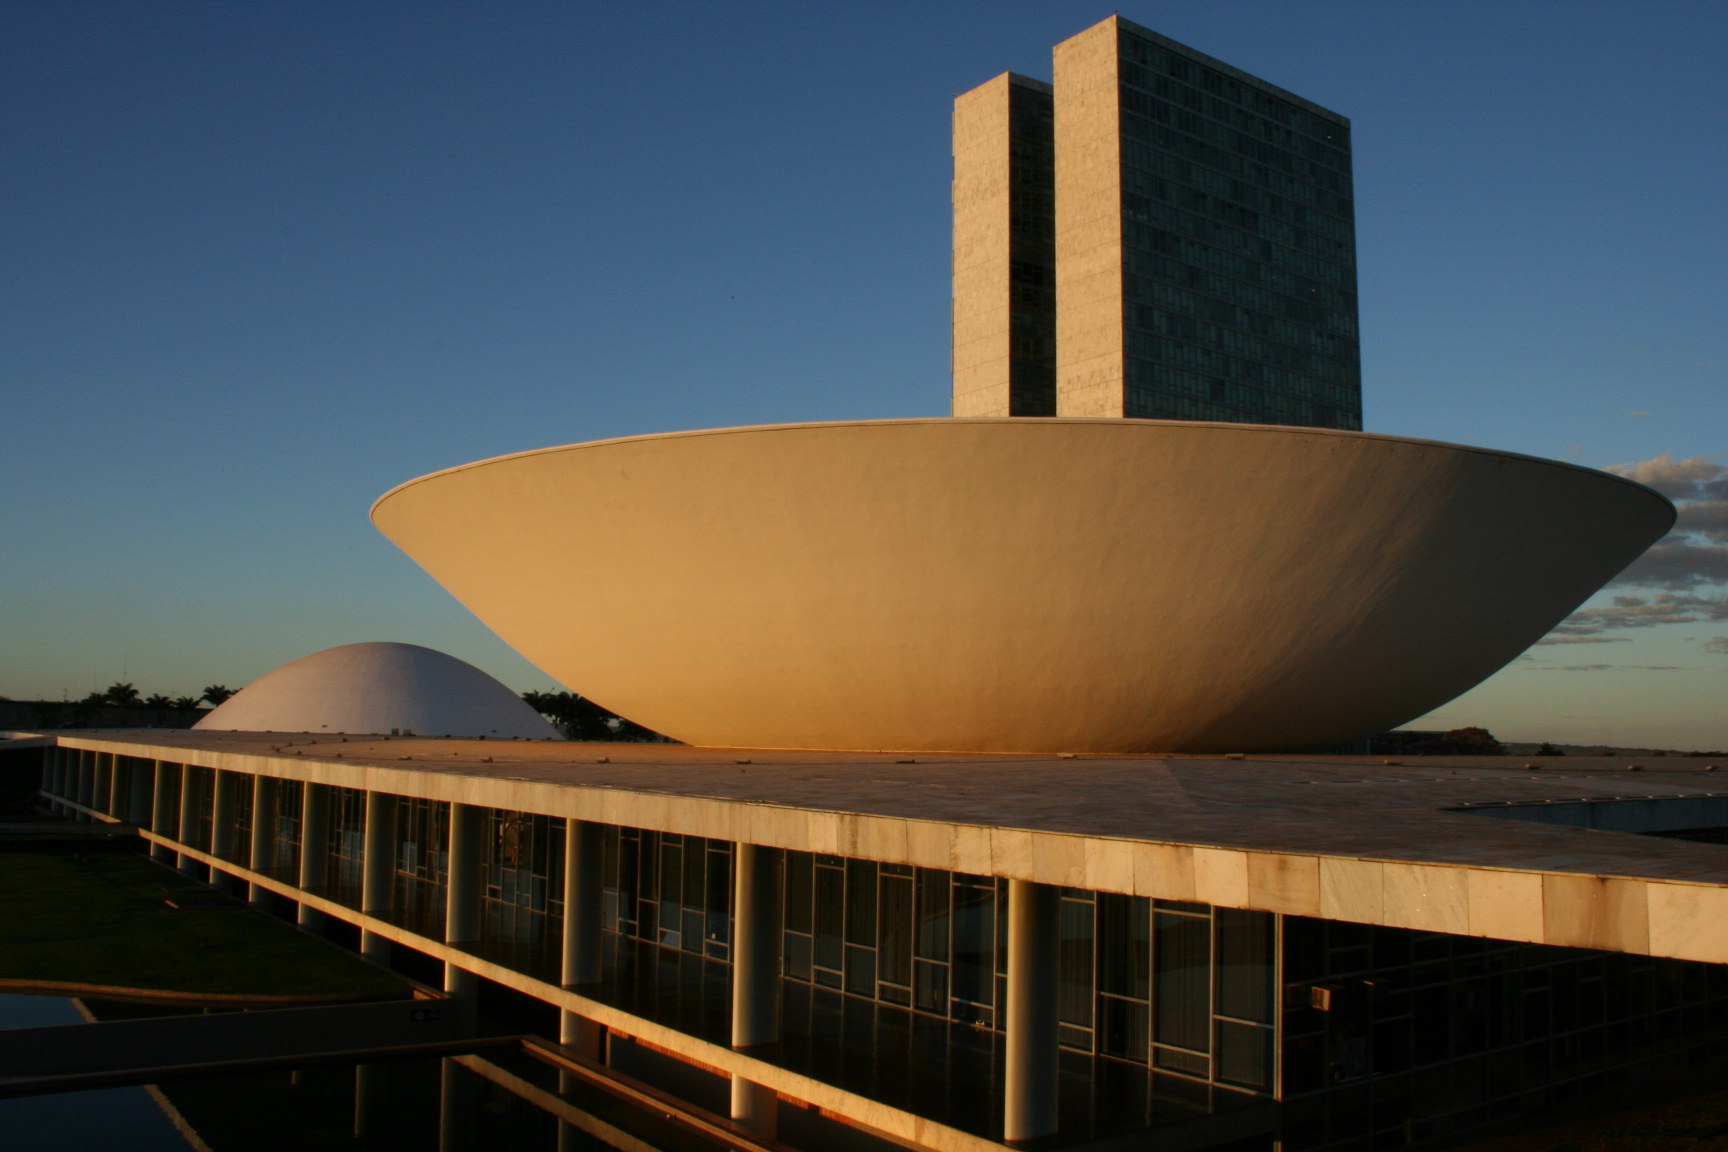 Brazilian insolvency regimes under scrutiny